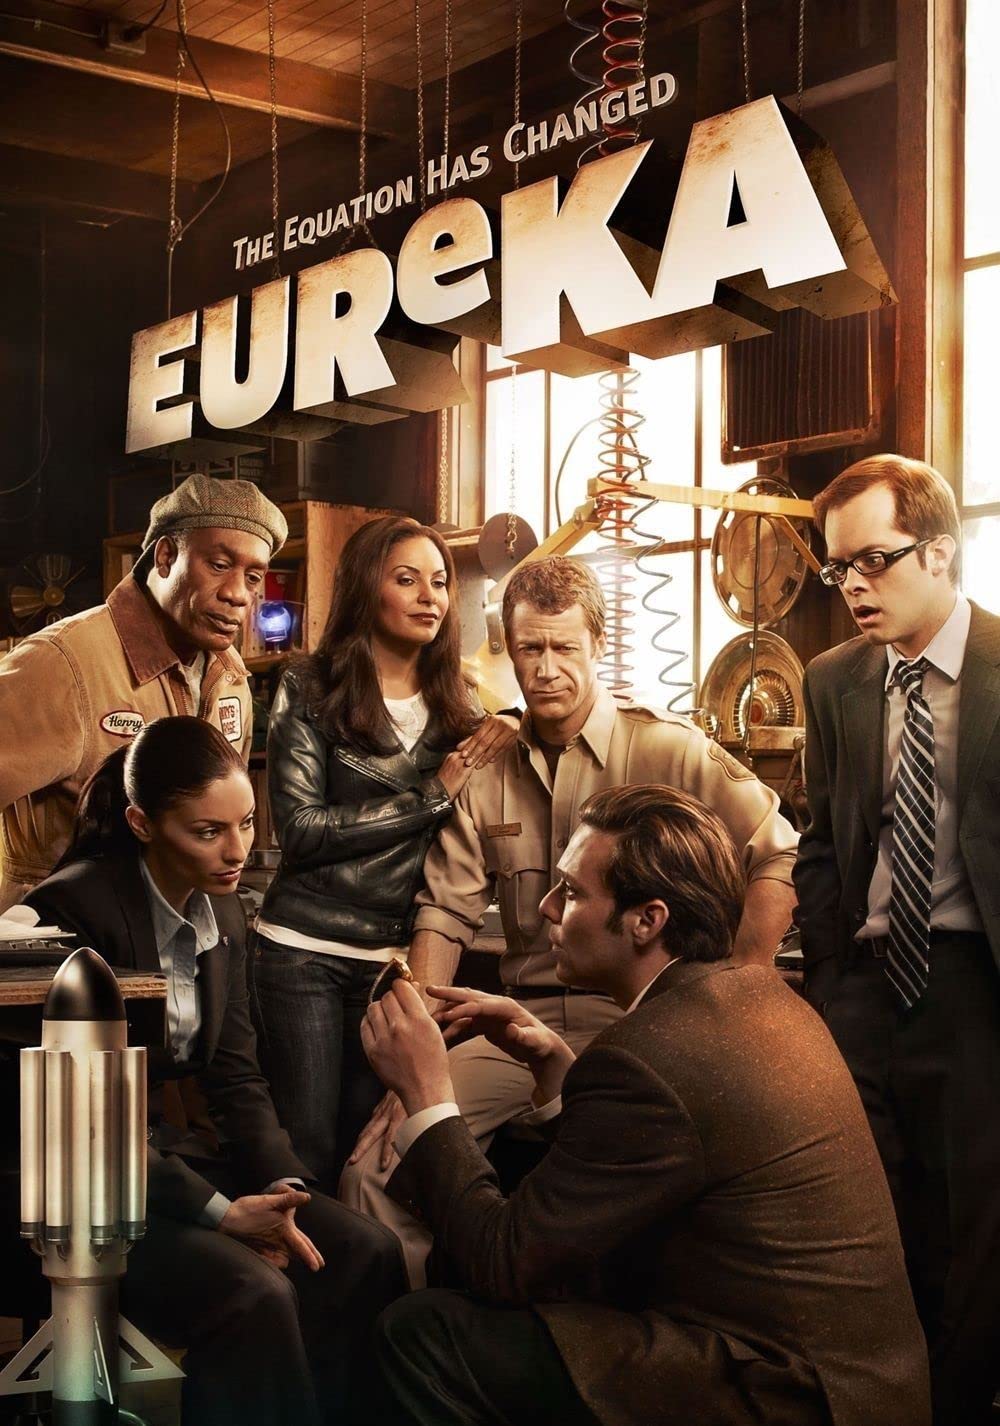 Eureka (2006)